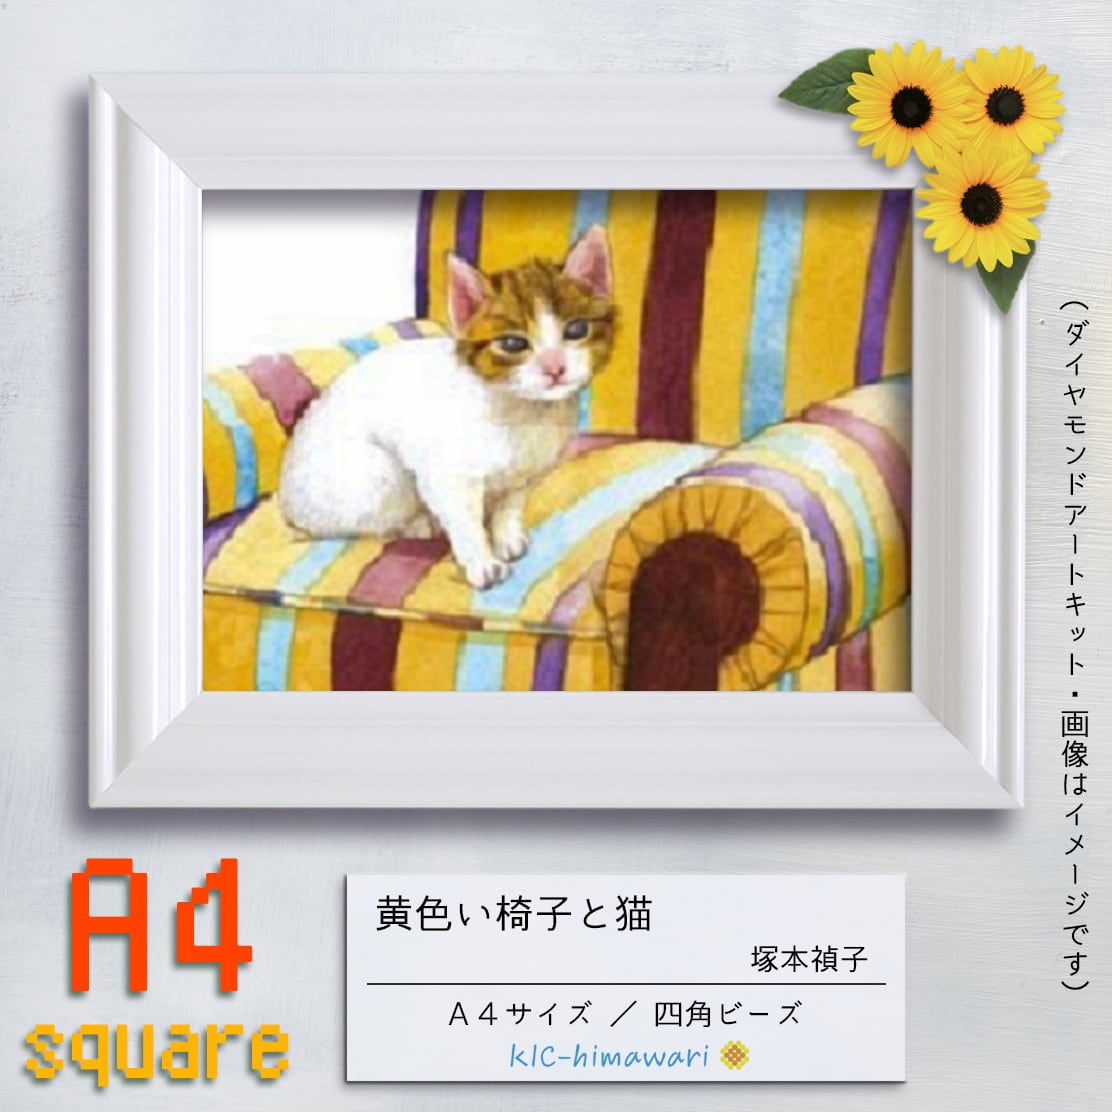 【China】A4s tei-023『黄色い椅子と猫』塚本禎子のダイヤモンドアートキット❀